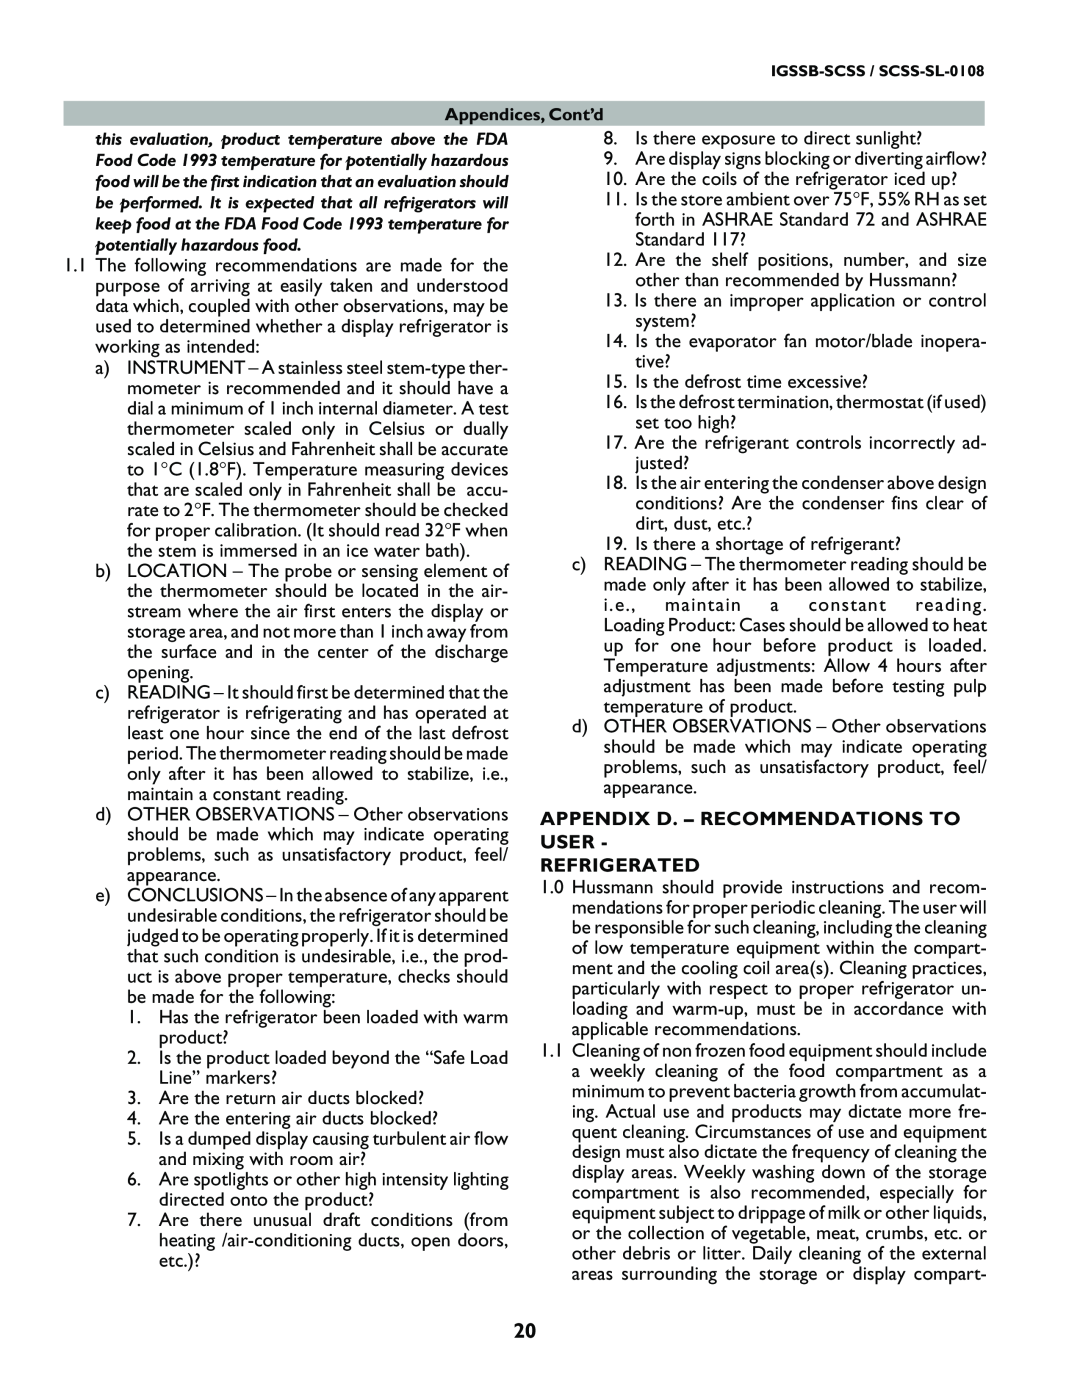 hussman SCSS-SL manual Appendix D. - Recommendations To User Refrigerated, Appendices, Cont’d 